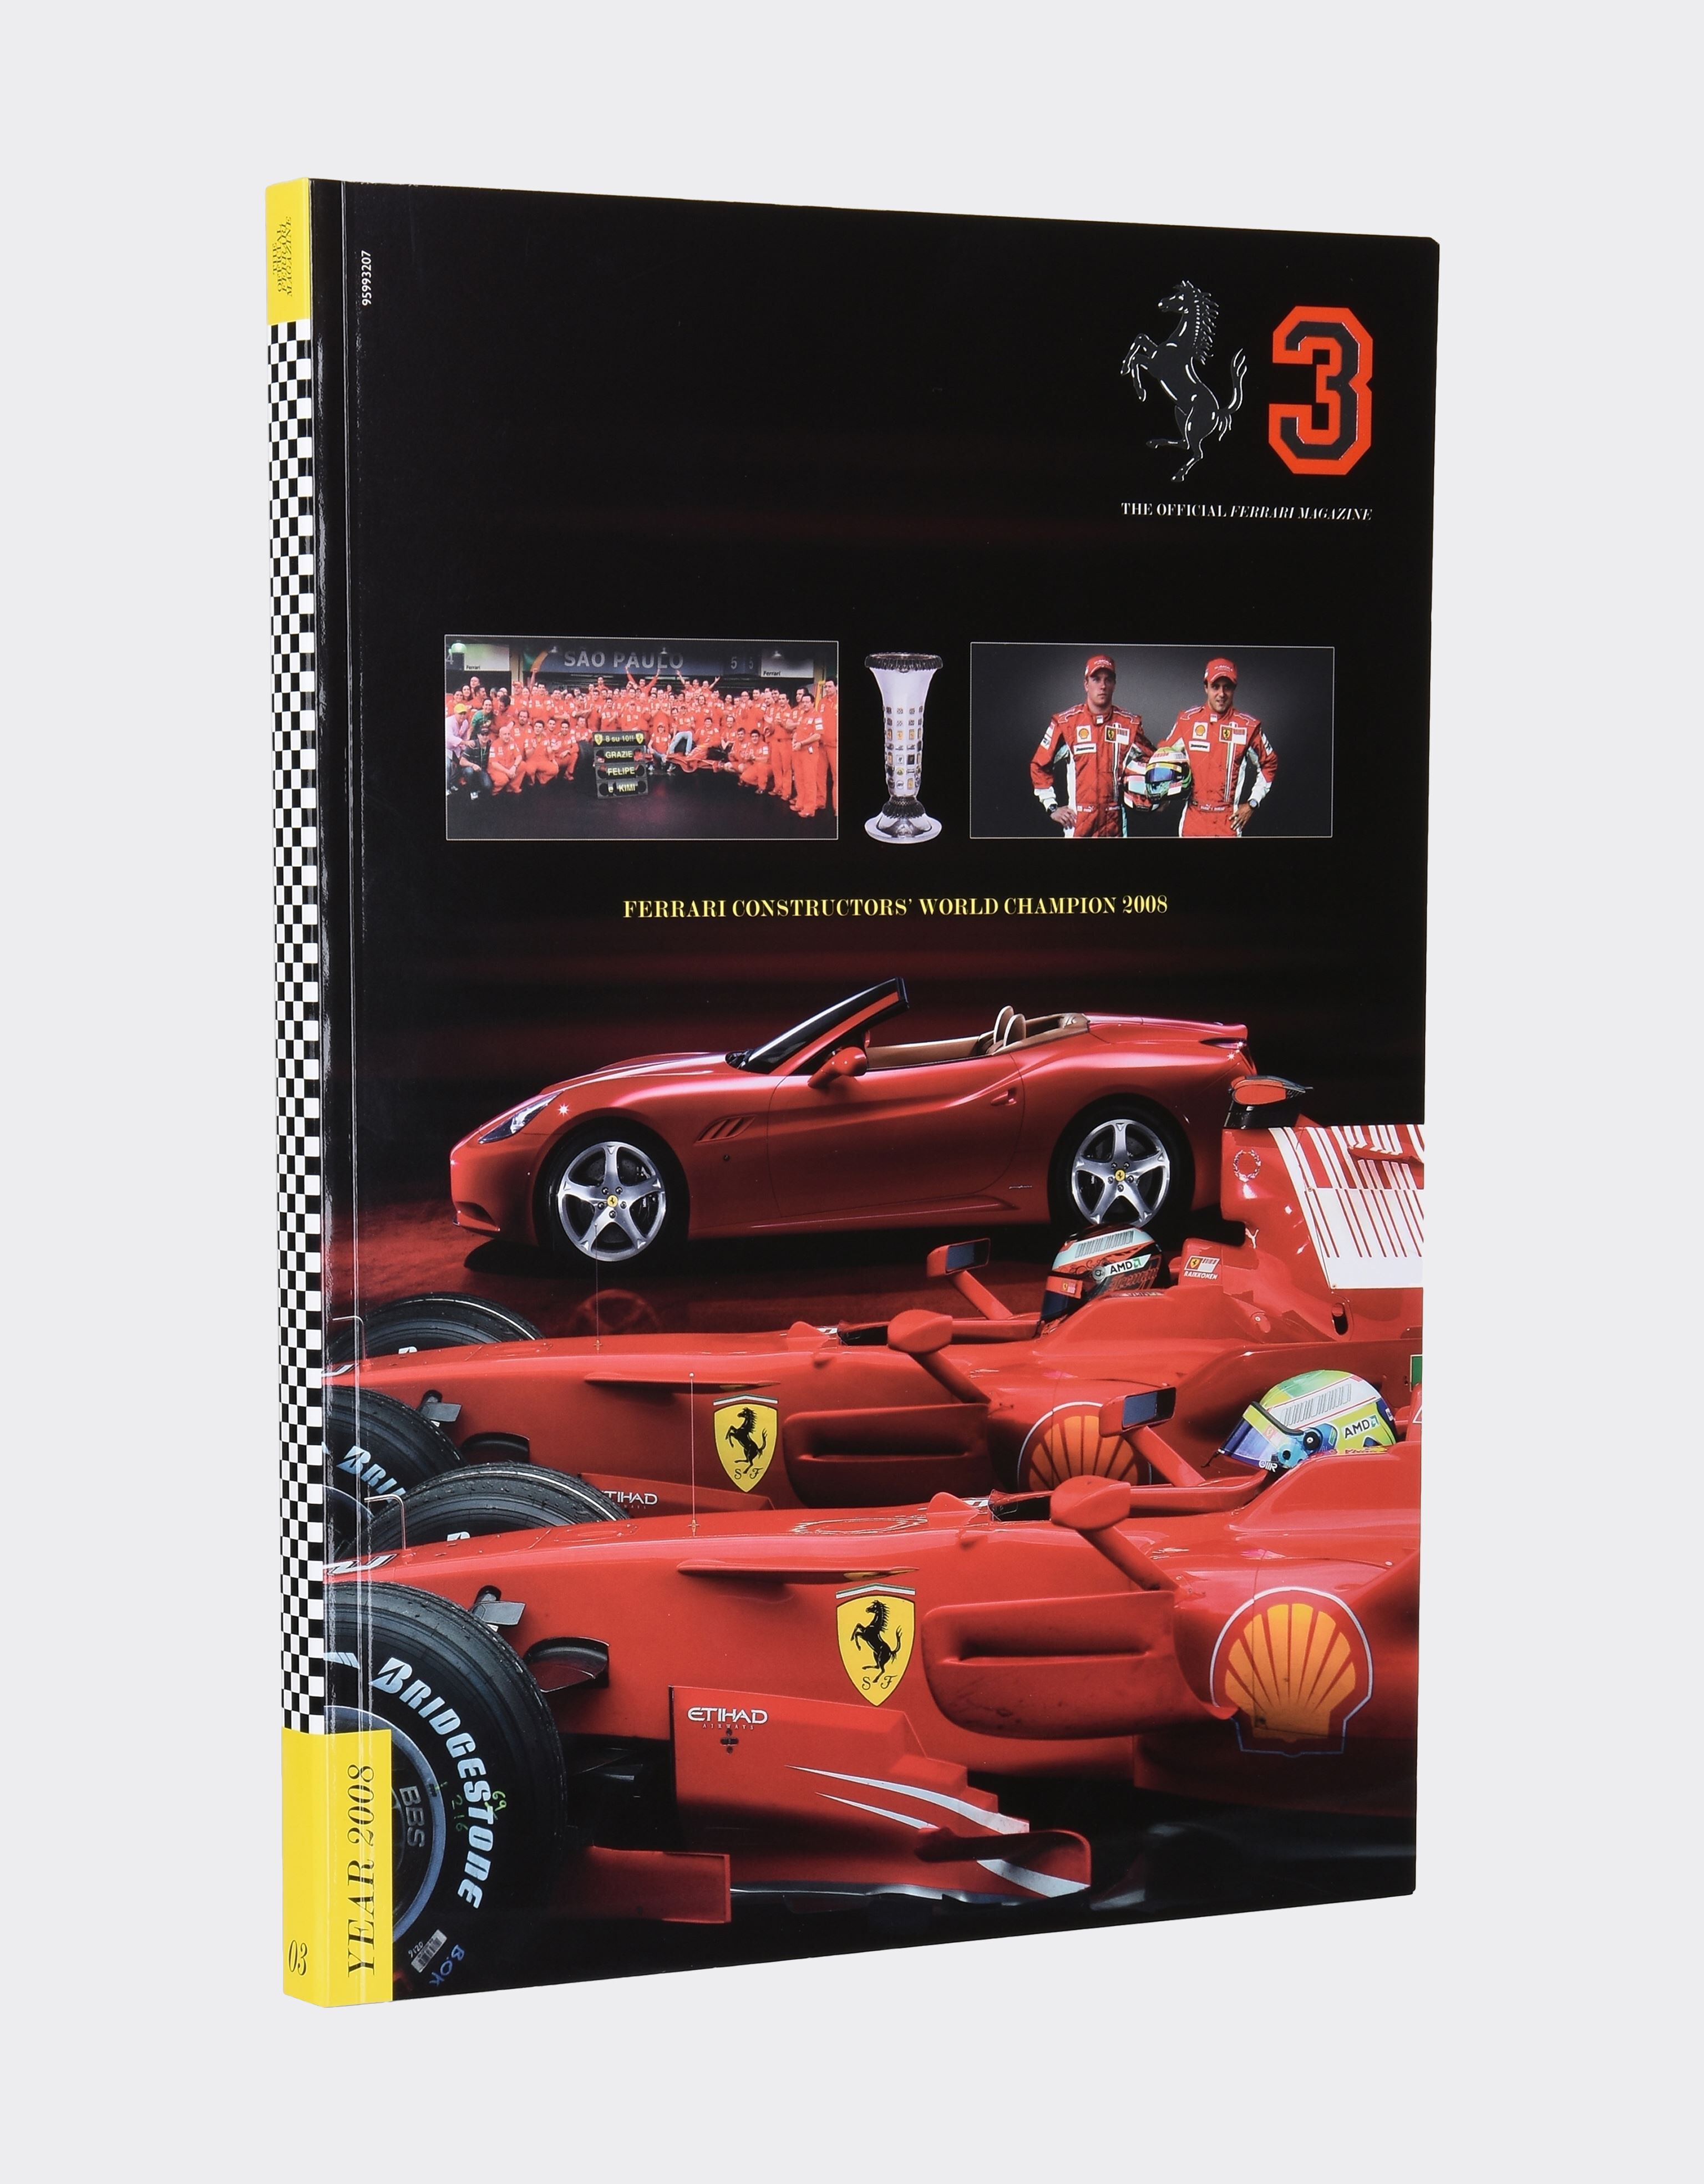 Ferrari The Official Ferrari Magazine issue 3 - 2008 Yearbook 多色 06394f